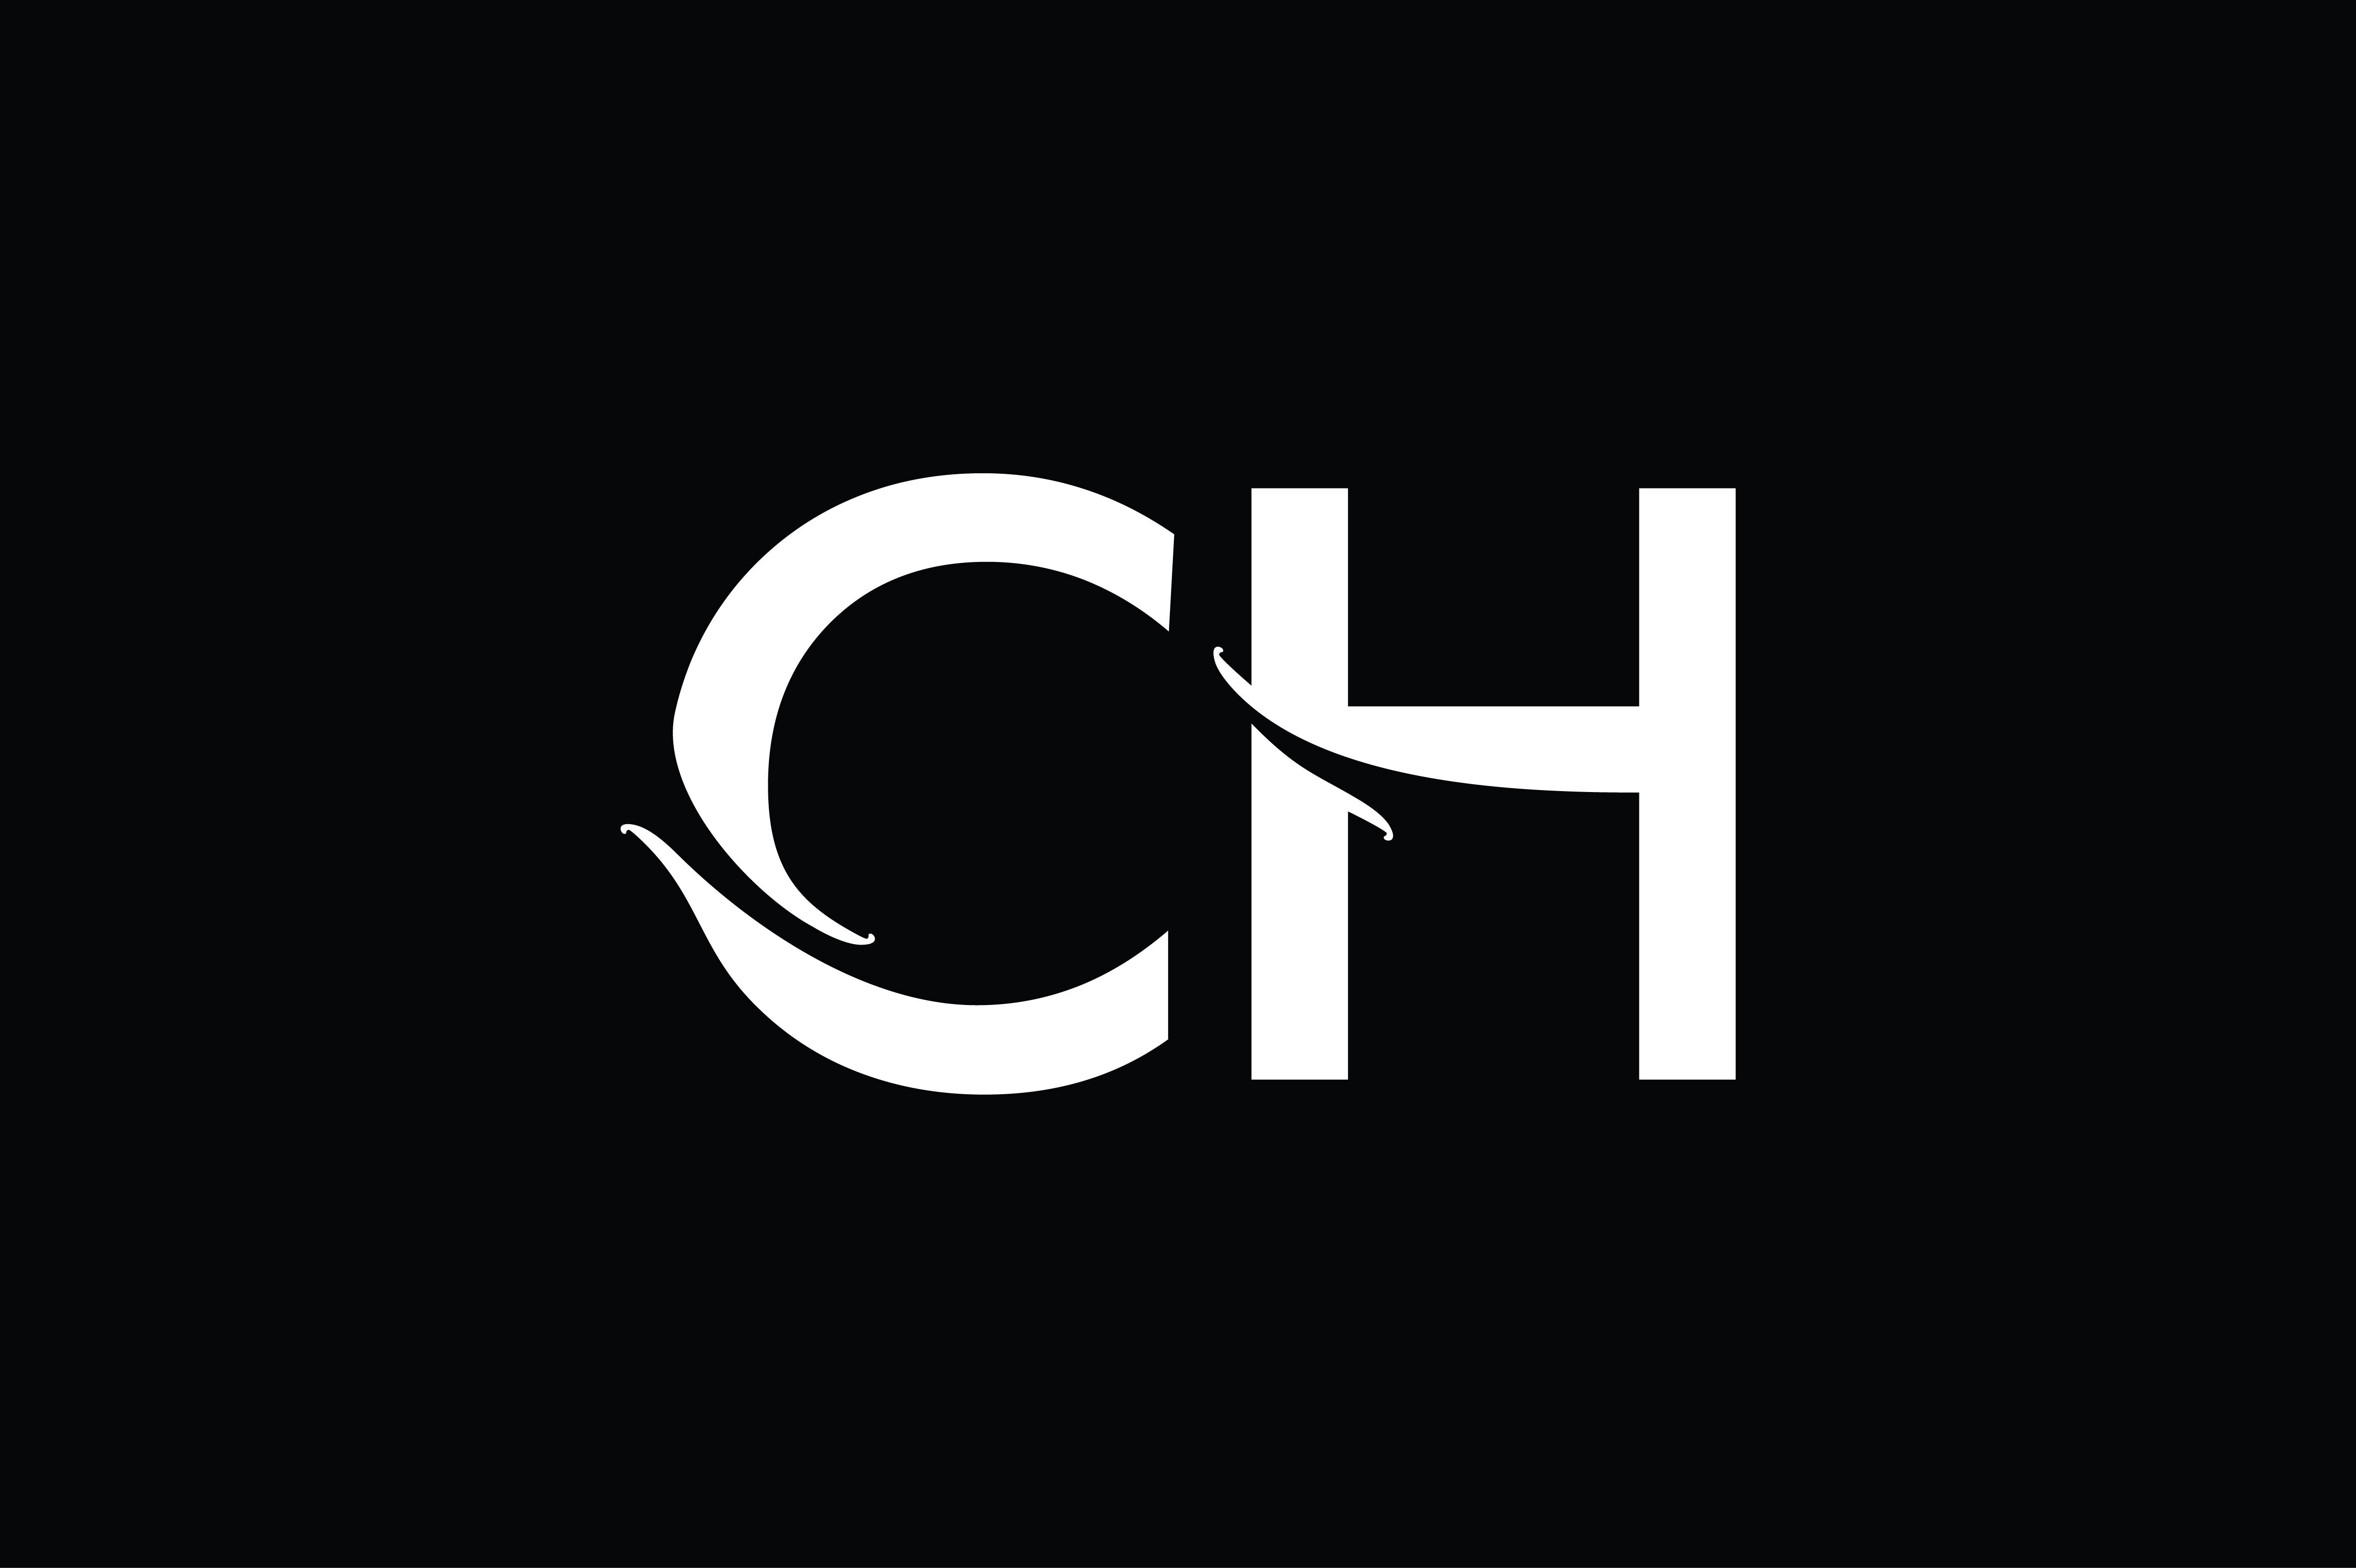 Ch ya. Логотип СН. Буква Ch. Логотип буквы Ch.